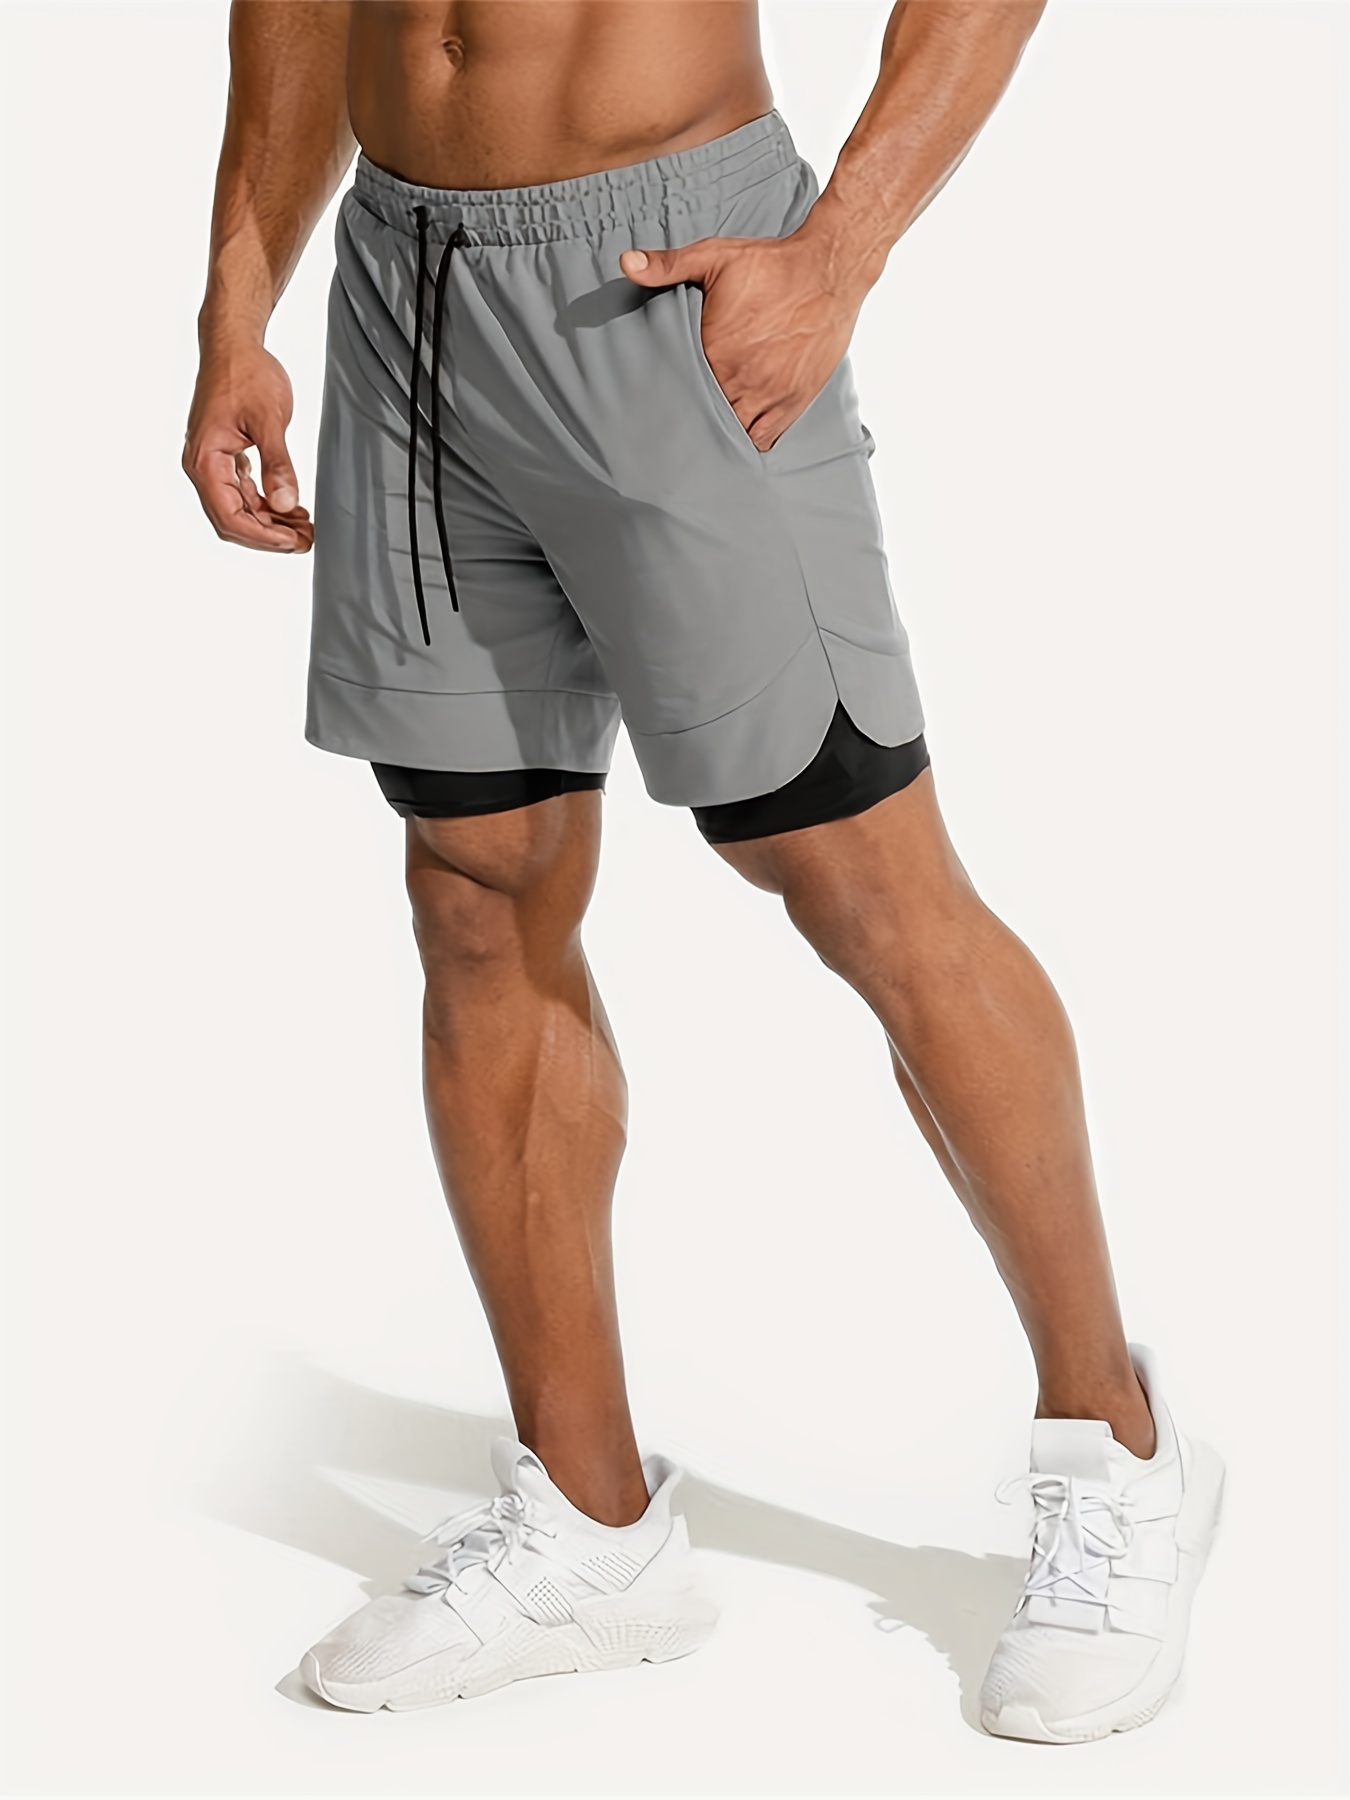  Workout Shorts For Men Plus Size Athletic Shorts